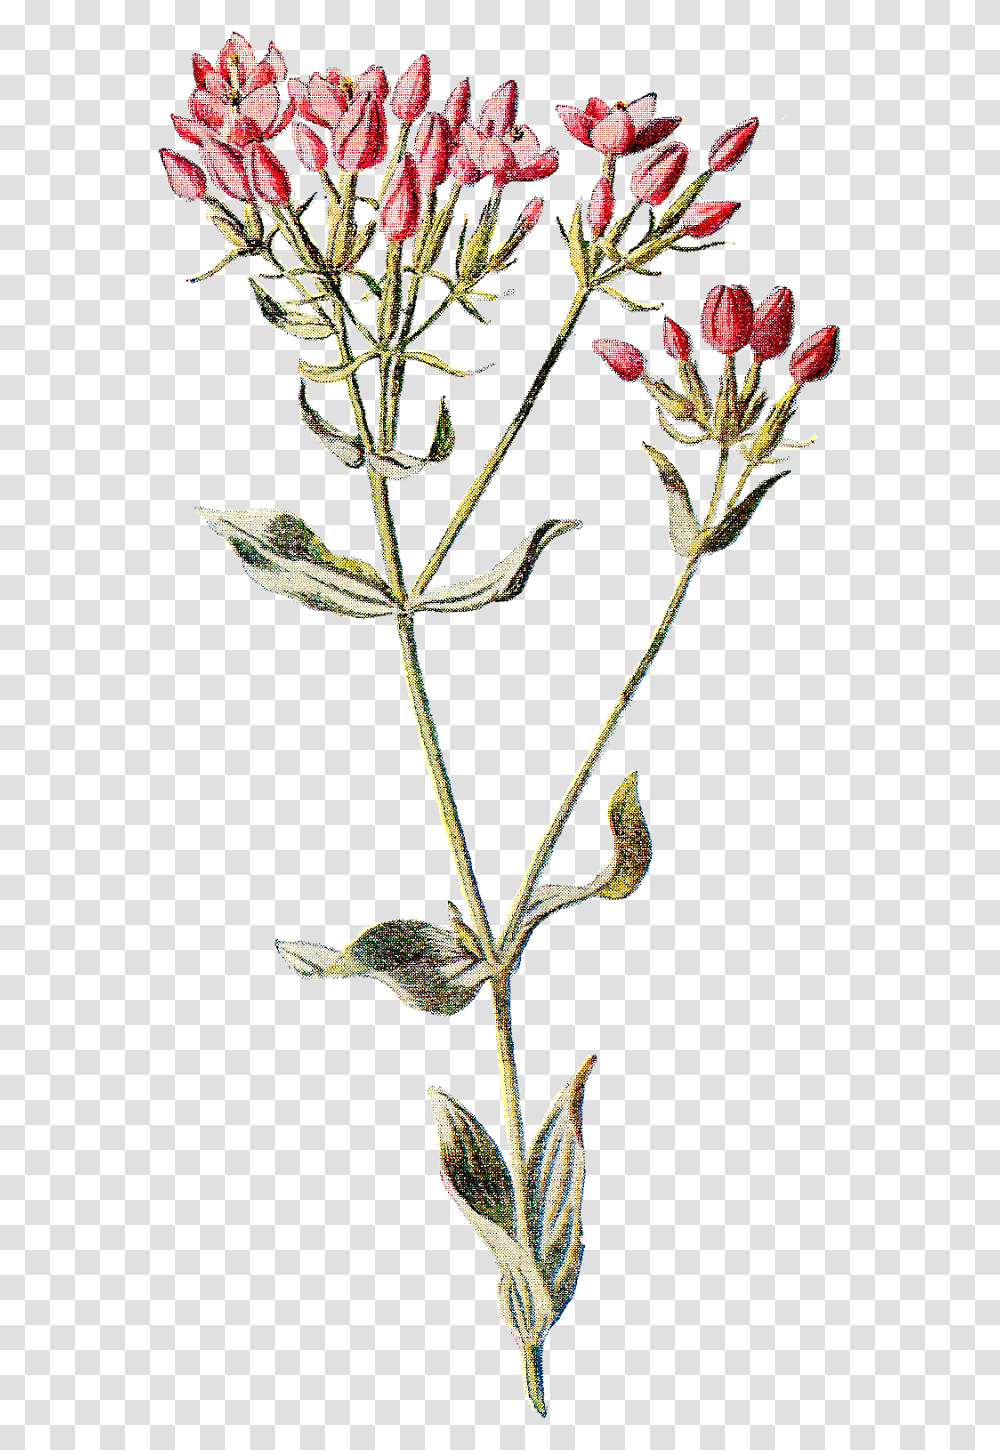 Library Of Dainty Flower Jpg Botanical Wild Flower Illustration, Plant, Bush, Vegetation, Outdoors Transparent Png